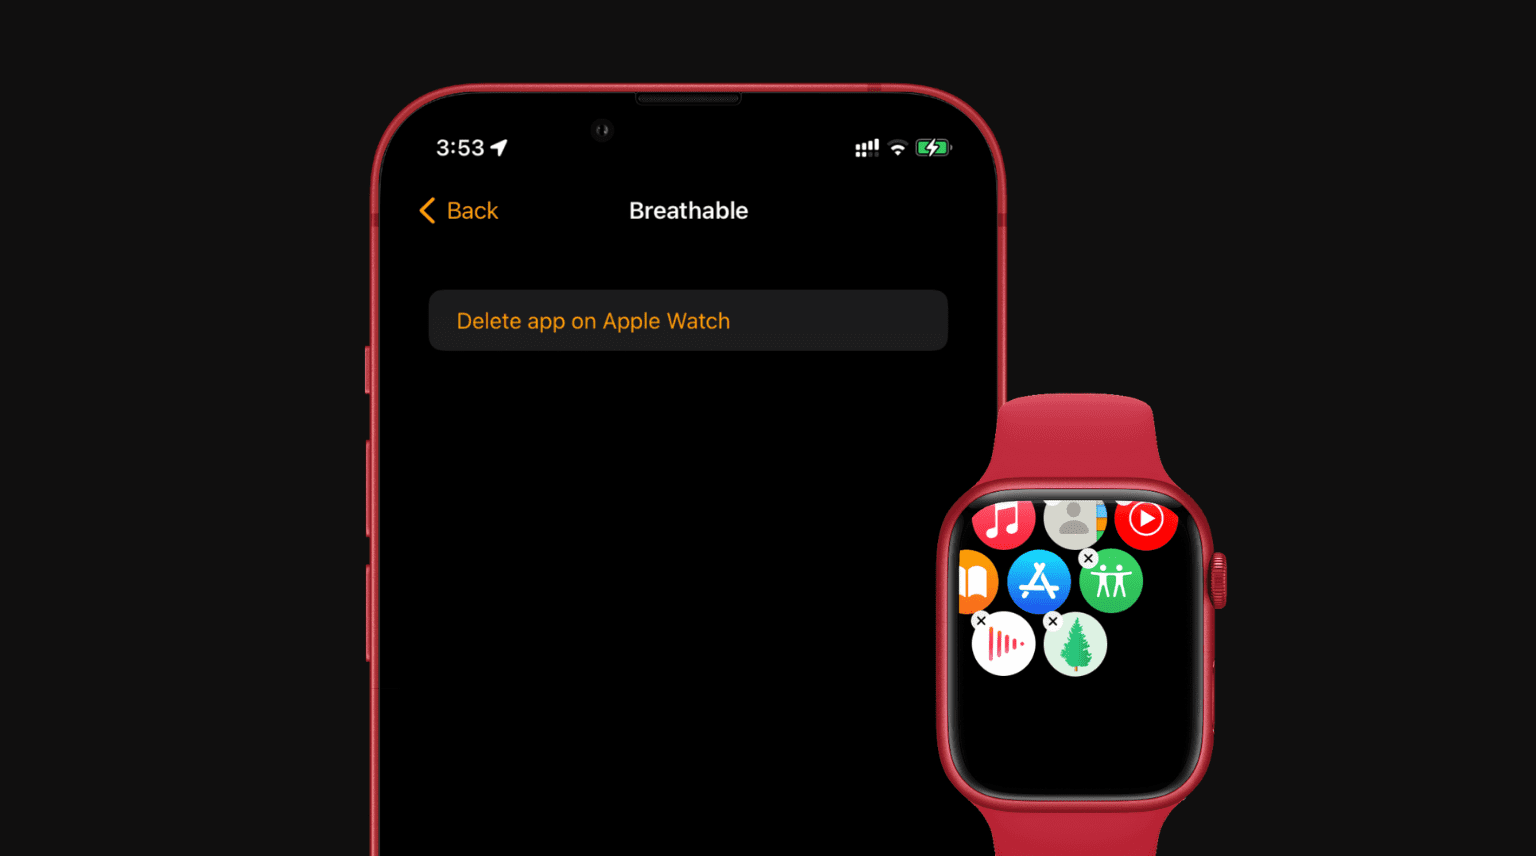 How to delete app on Apple Watch